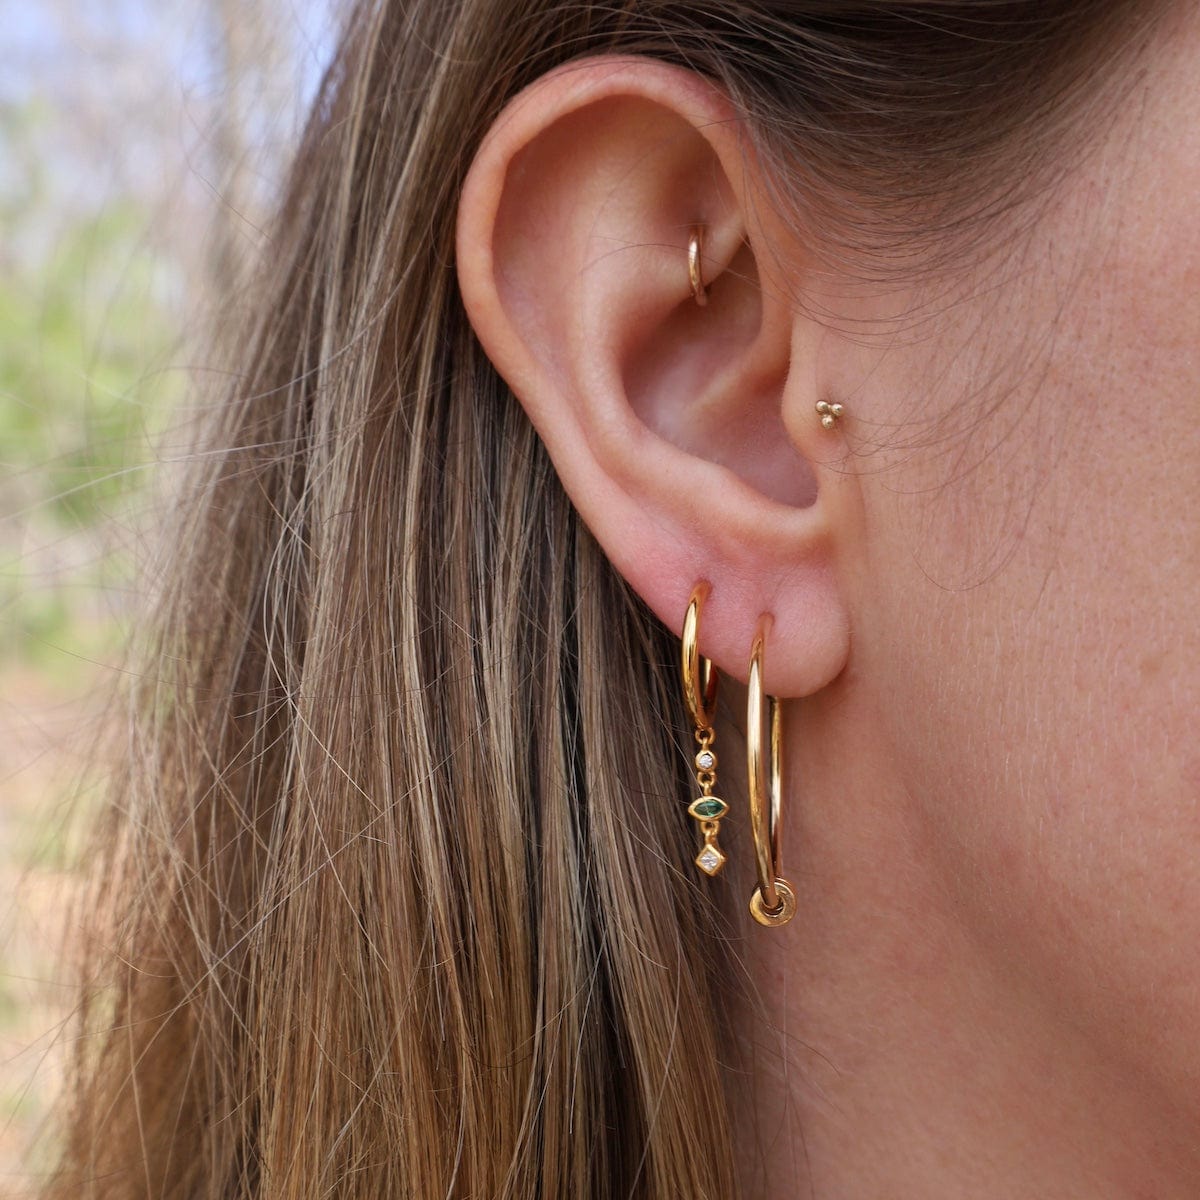 EAR-GF 24k Gold Vermeil Hoops with Three Smooth Rings